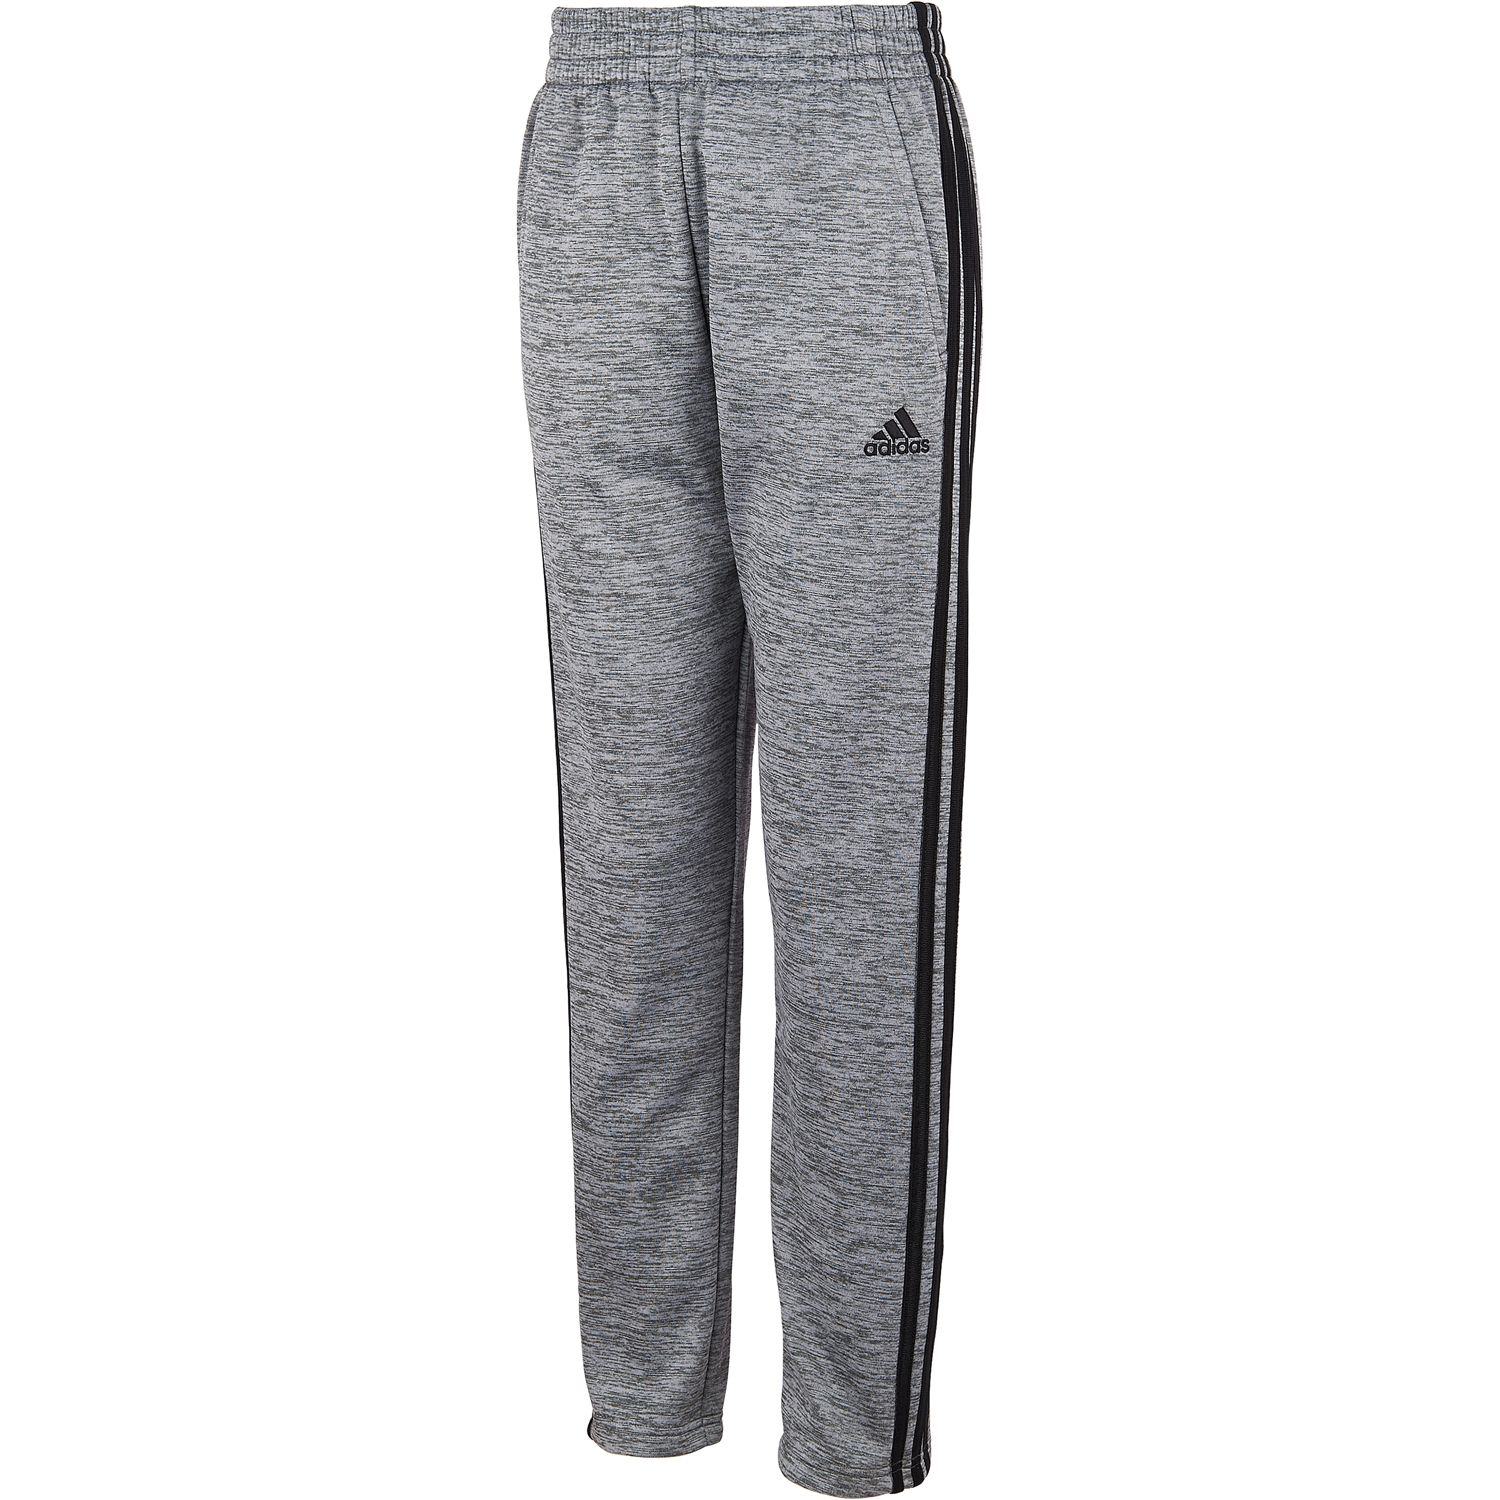 grey and black adidas sweatpants